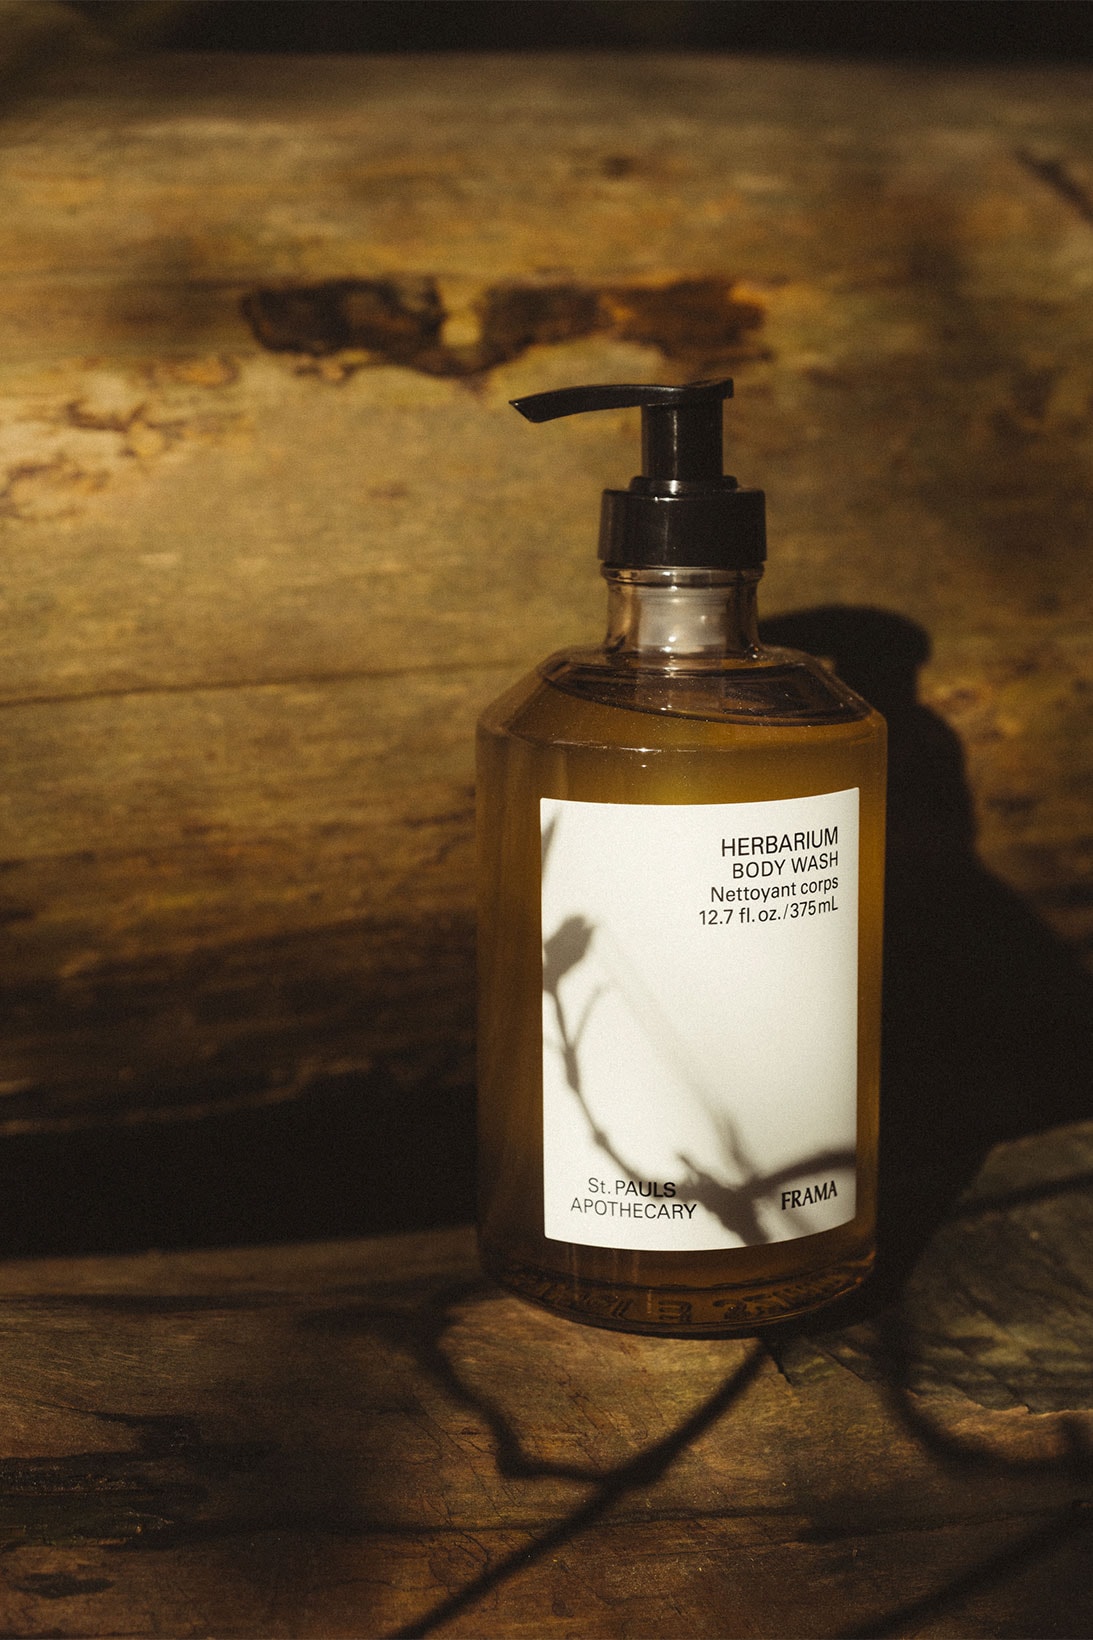 FRAMA "Herbarium" Gender-Neutral Self-Care Line Shampoos Hand Wash Release